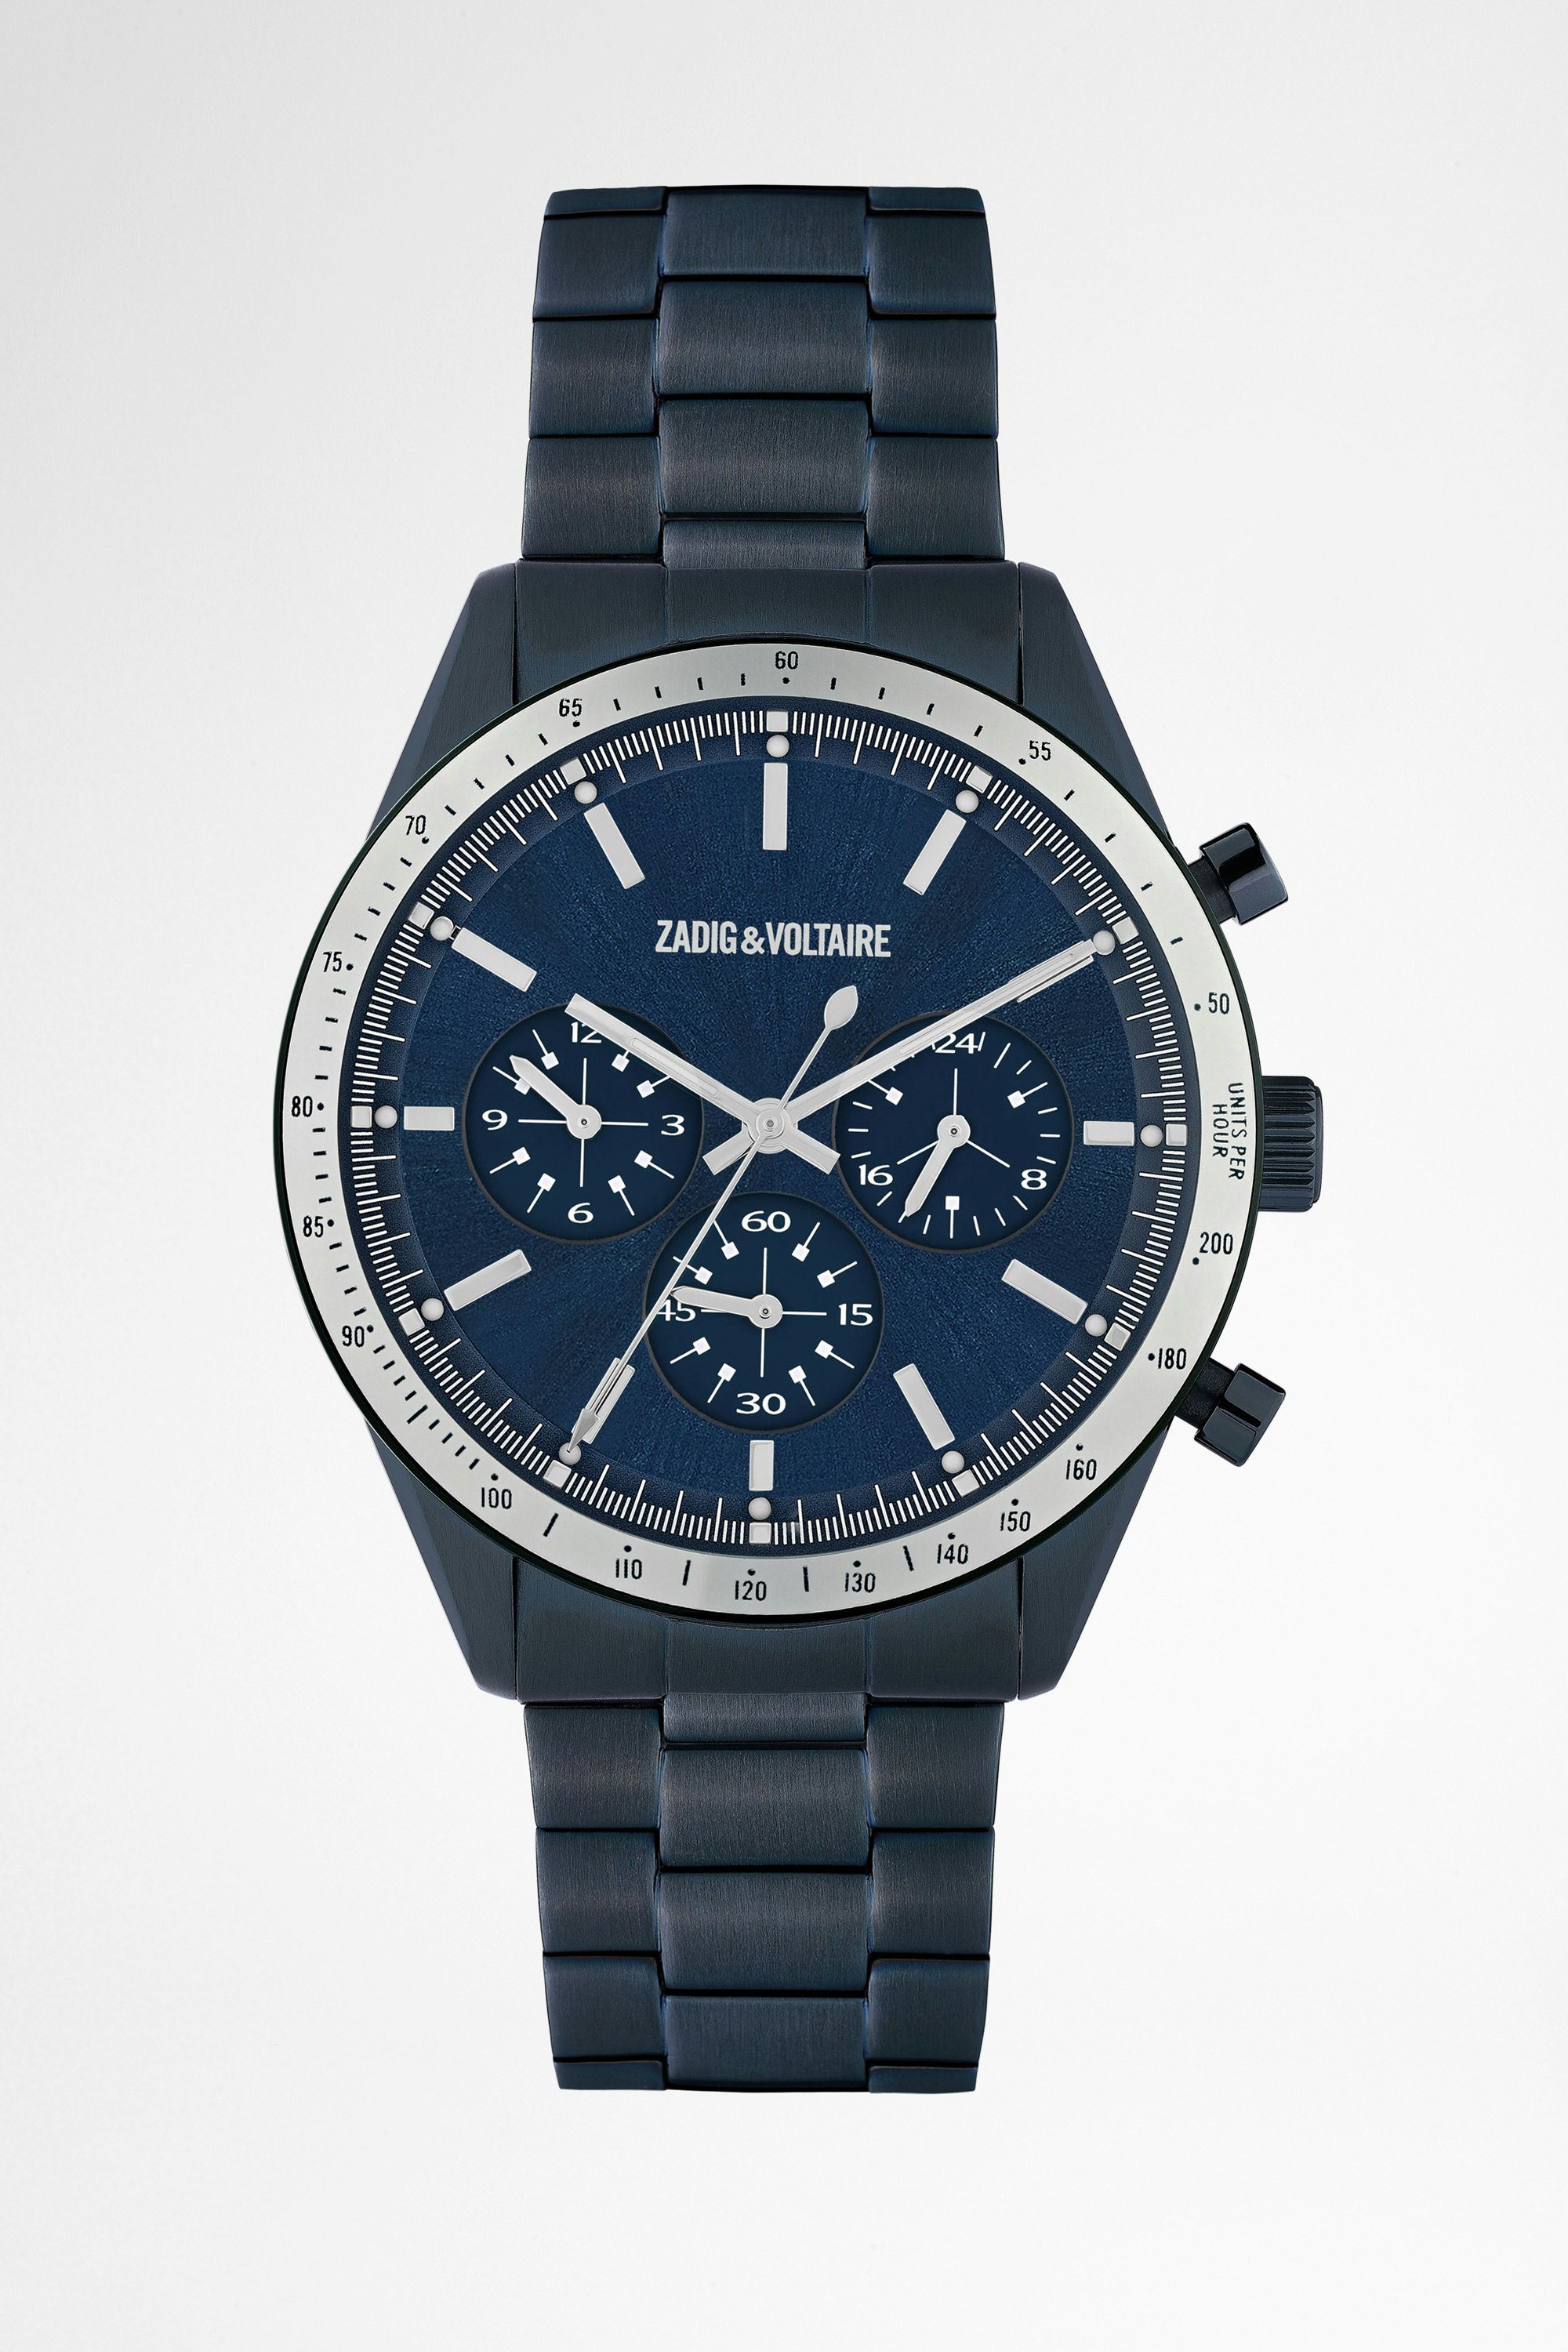 Master Watch in blue Men's steel watch with stopwatch in blue